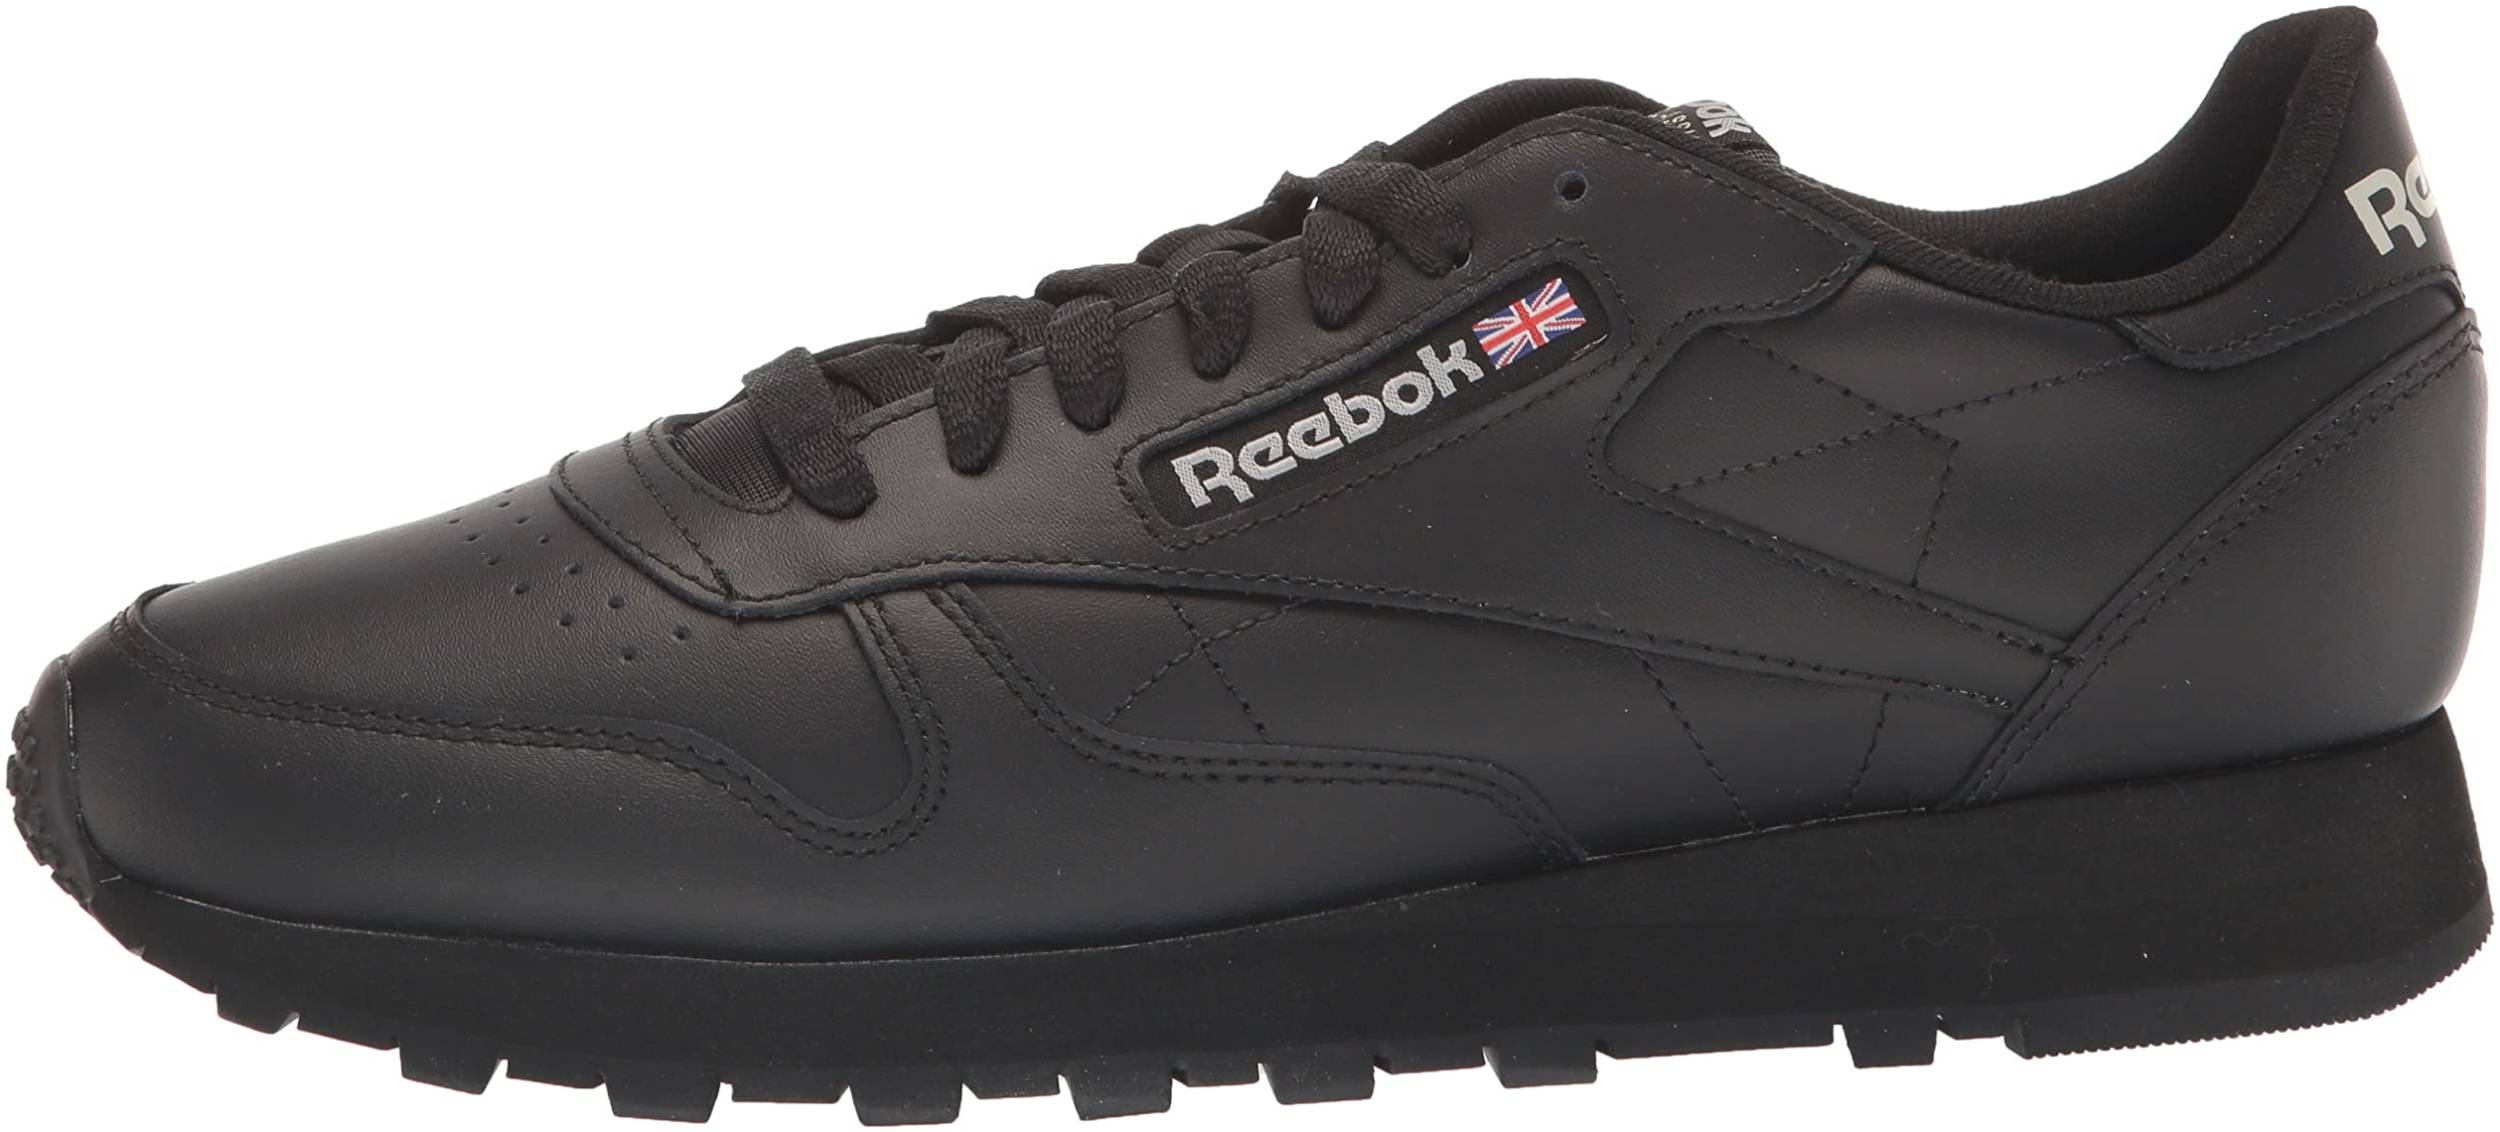 Men's Black Reebok Classic Leather Sneakers Size 13 Casual Comfort Walking 